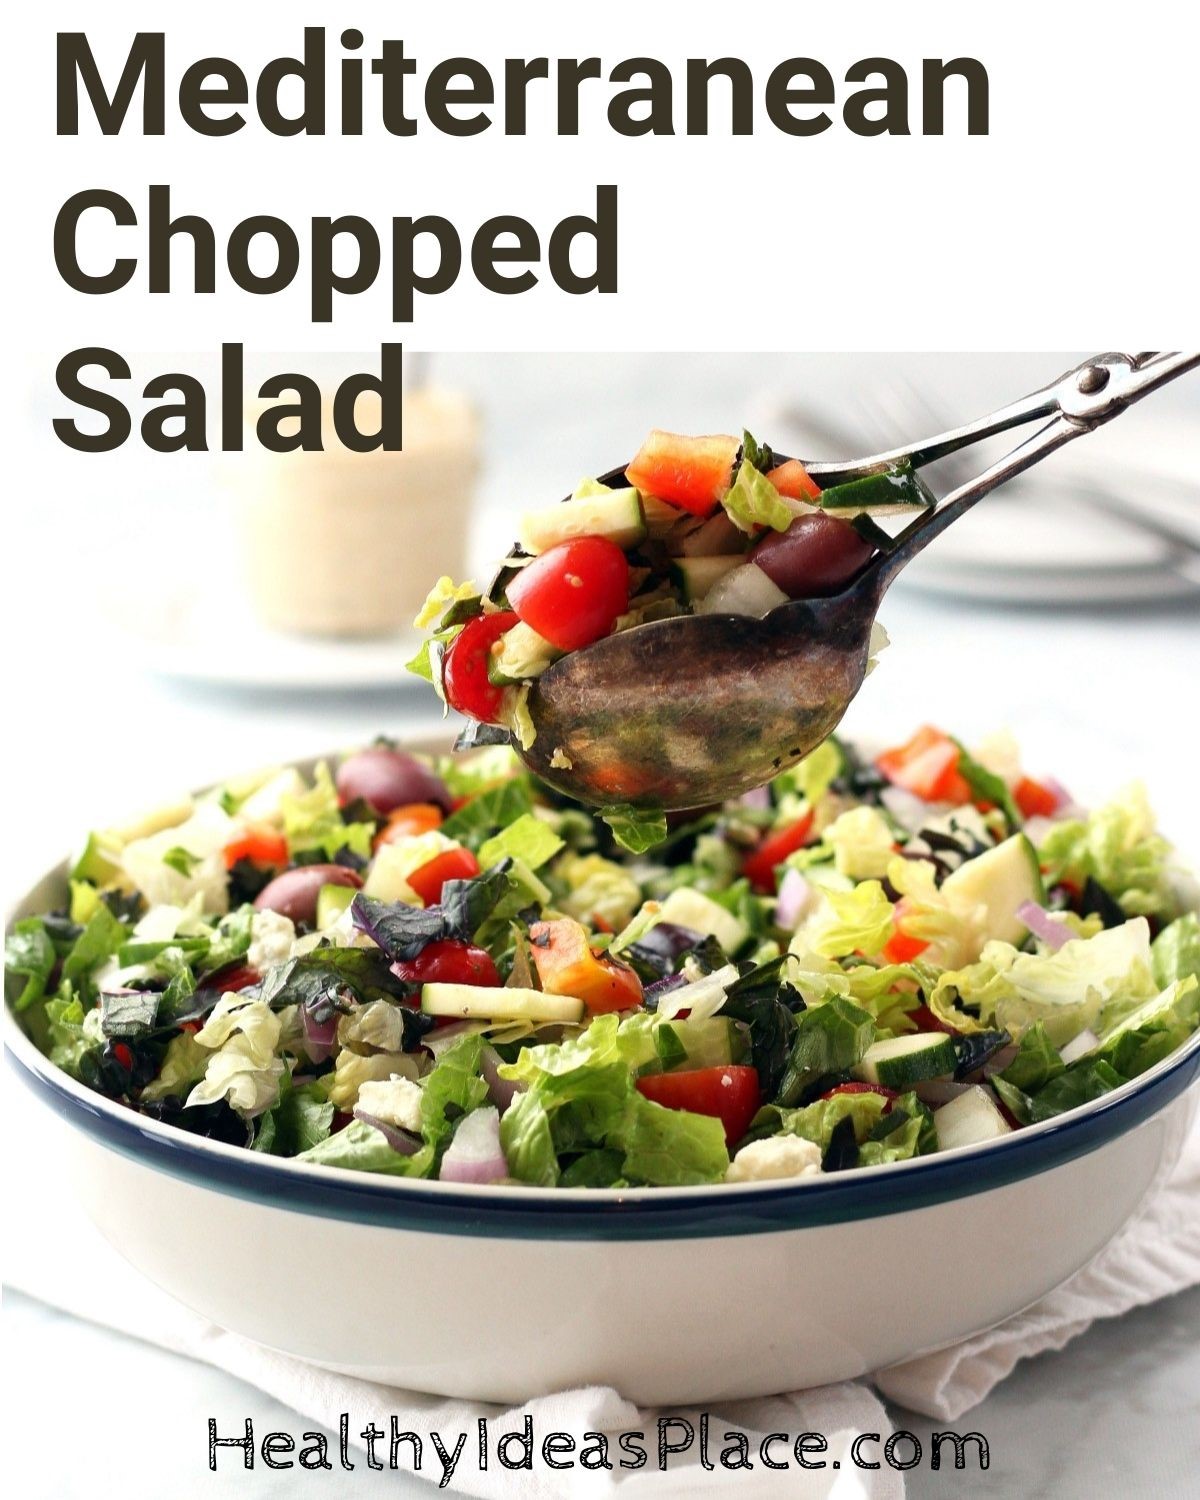 Mediterranean-Style Chopped Salad